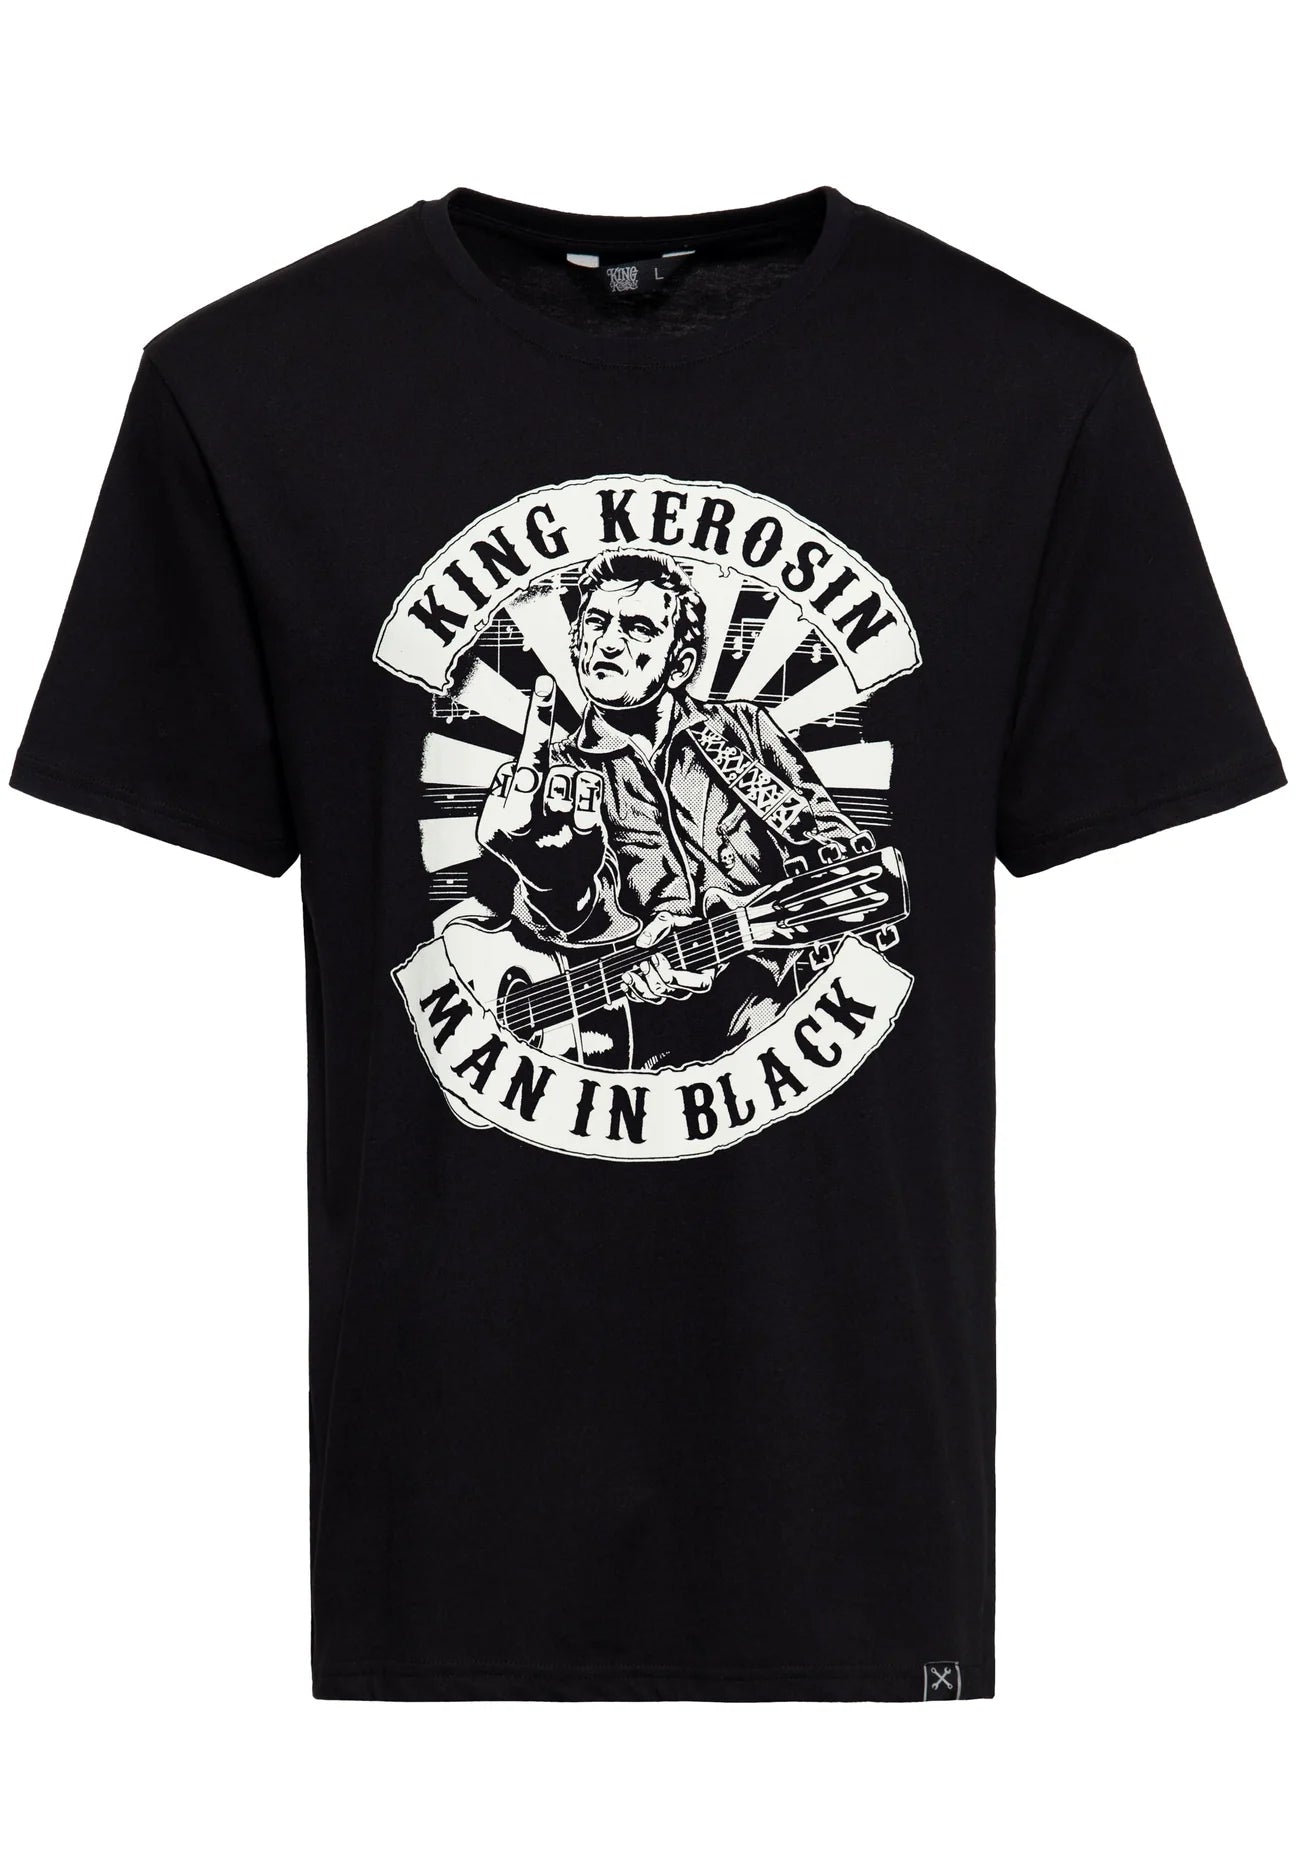 T-Shirt Classic "Man in black"